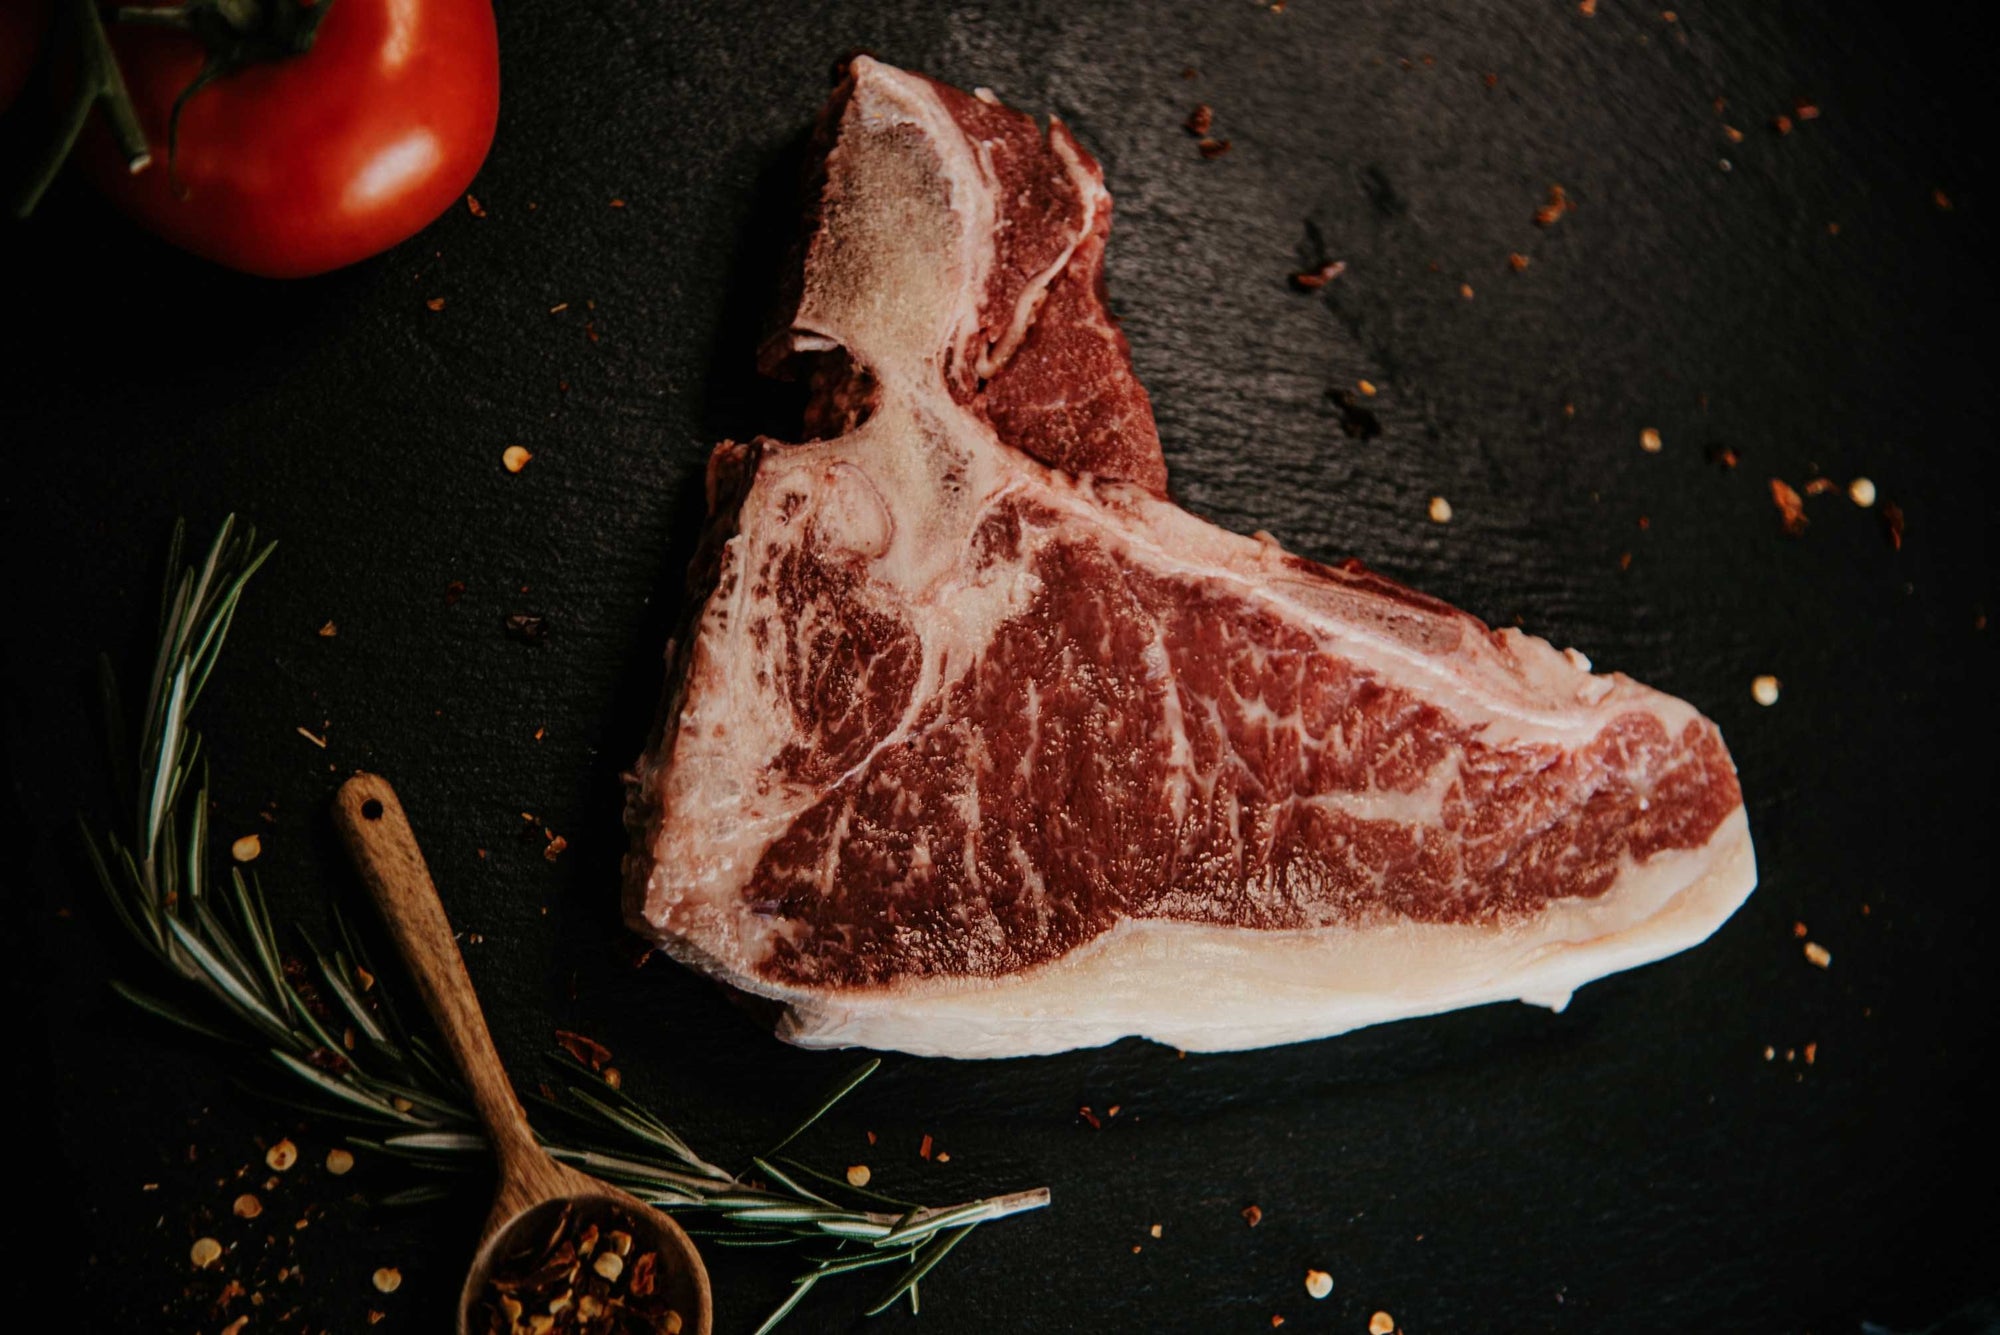 tbone_tbone steak_dry aged steak_premium steak_nebraska beef